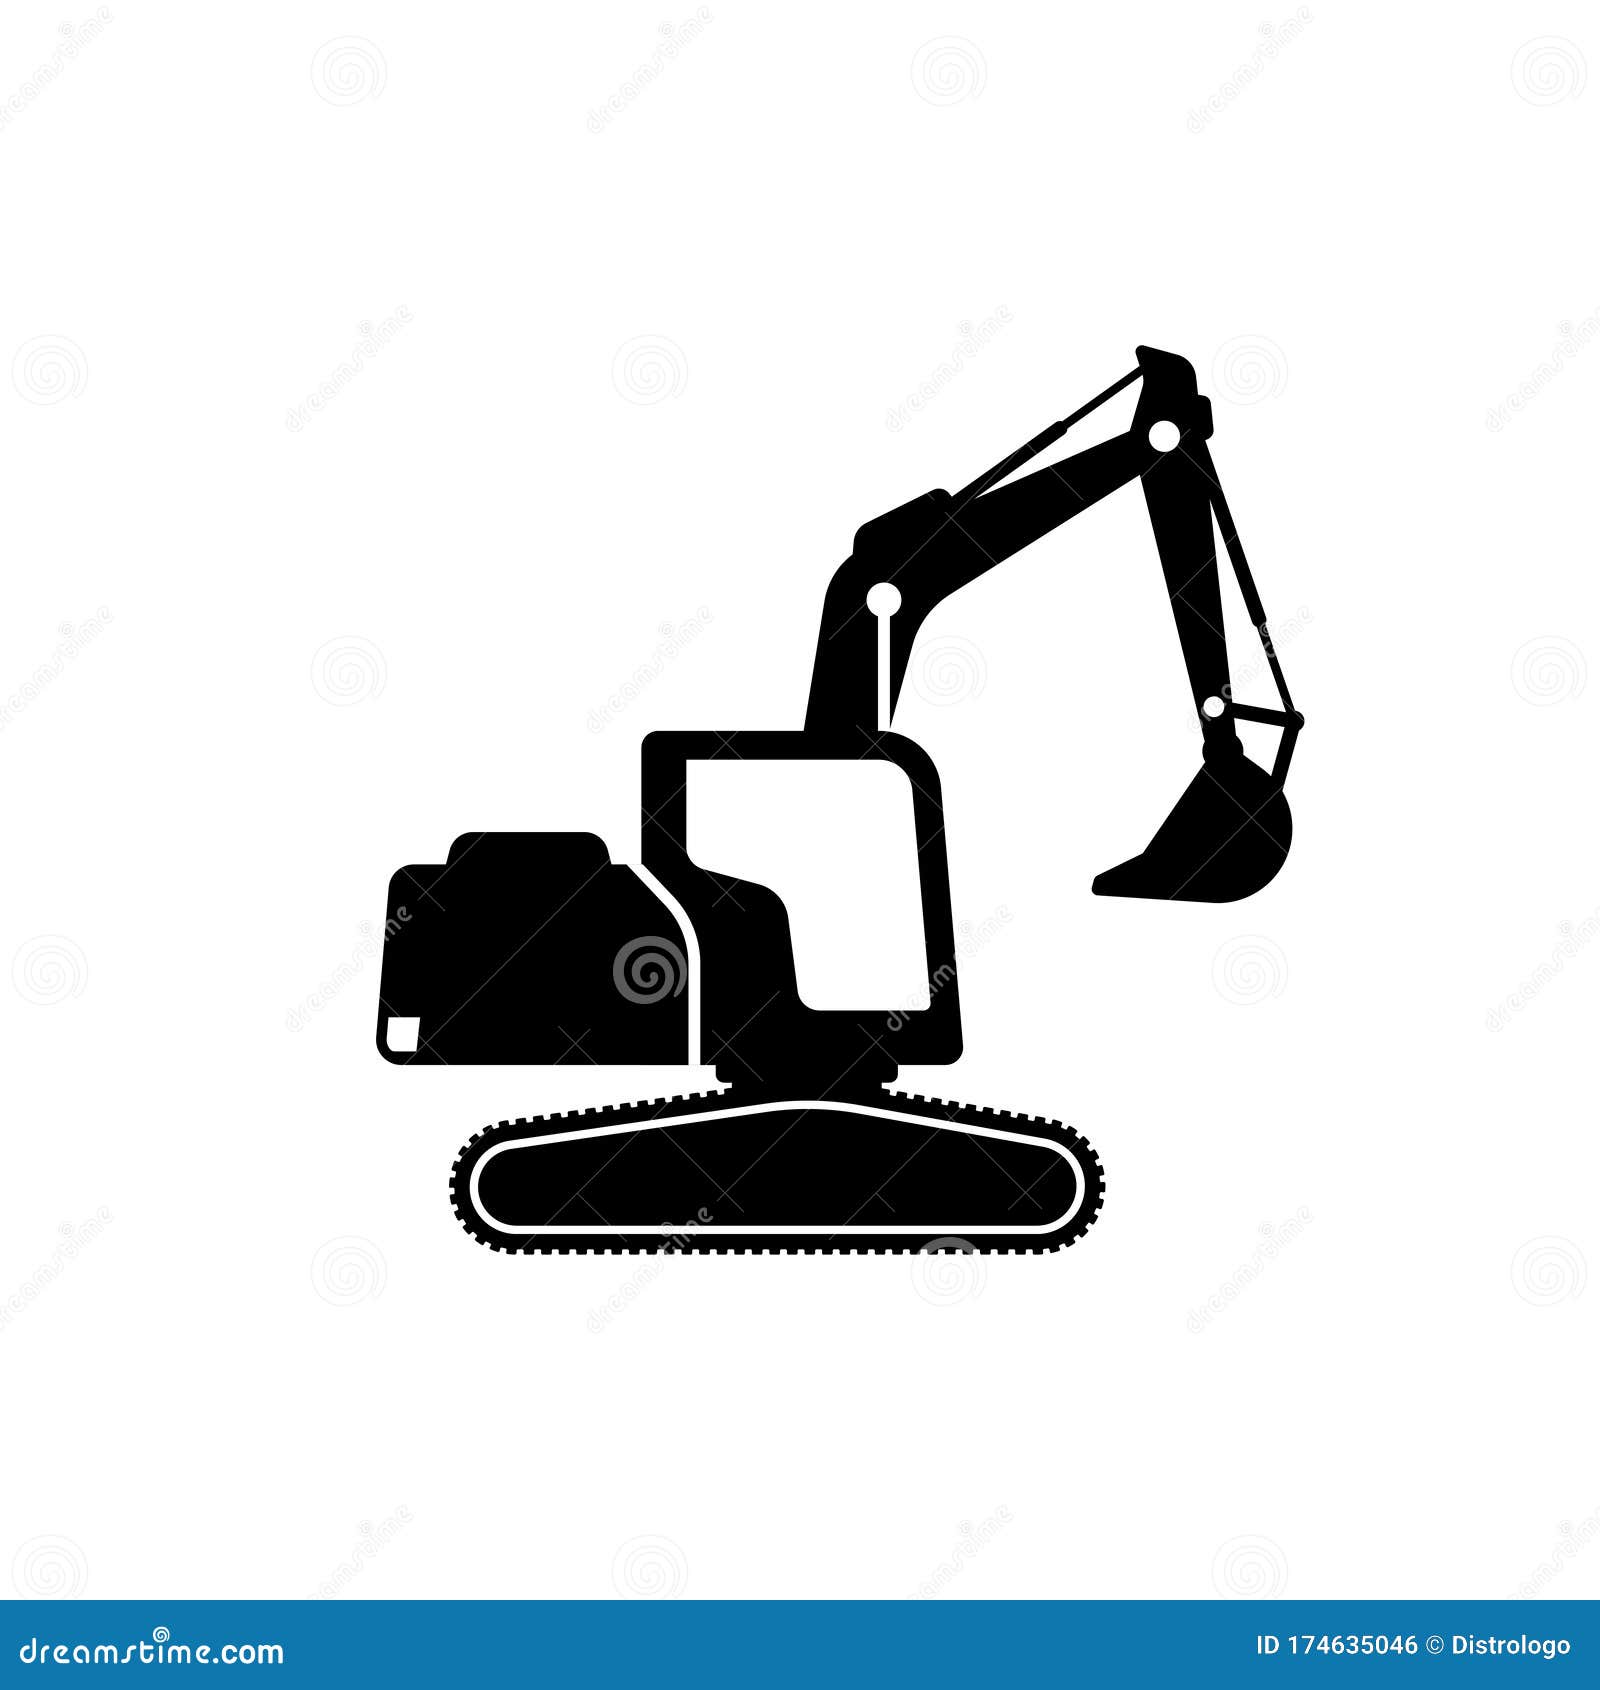 Download Silhouette Of Excavator Vector Design. Excavator Icon Sign Symbol Stock Vector - Illustration of ...